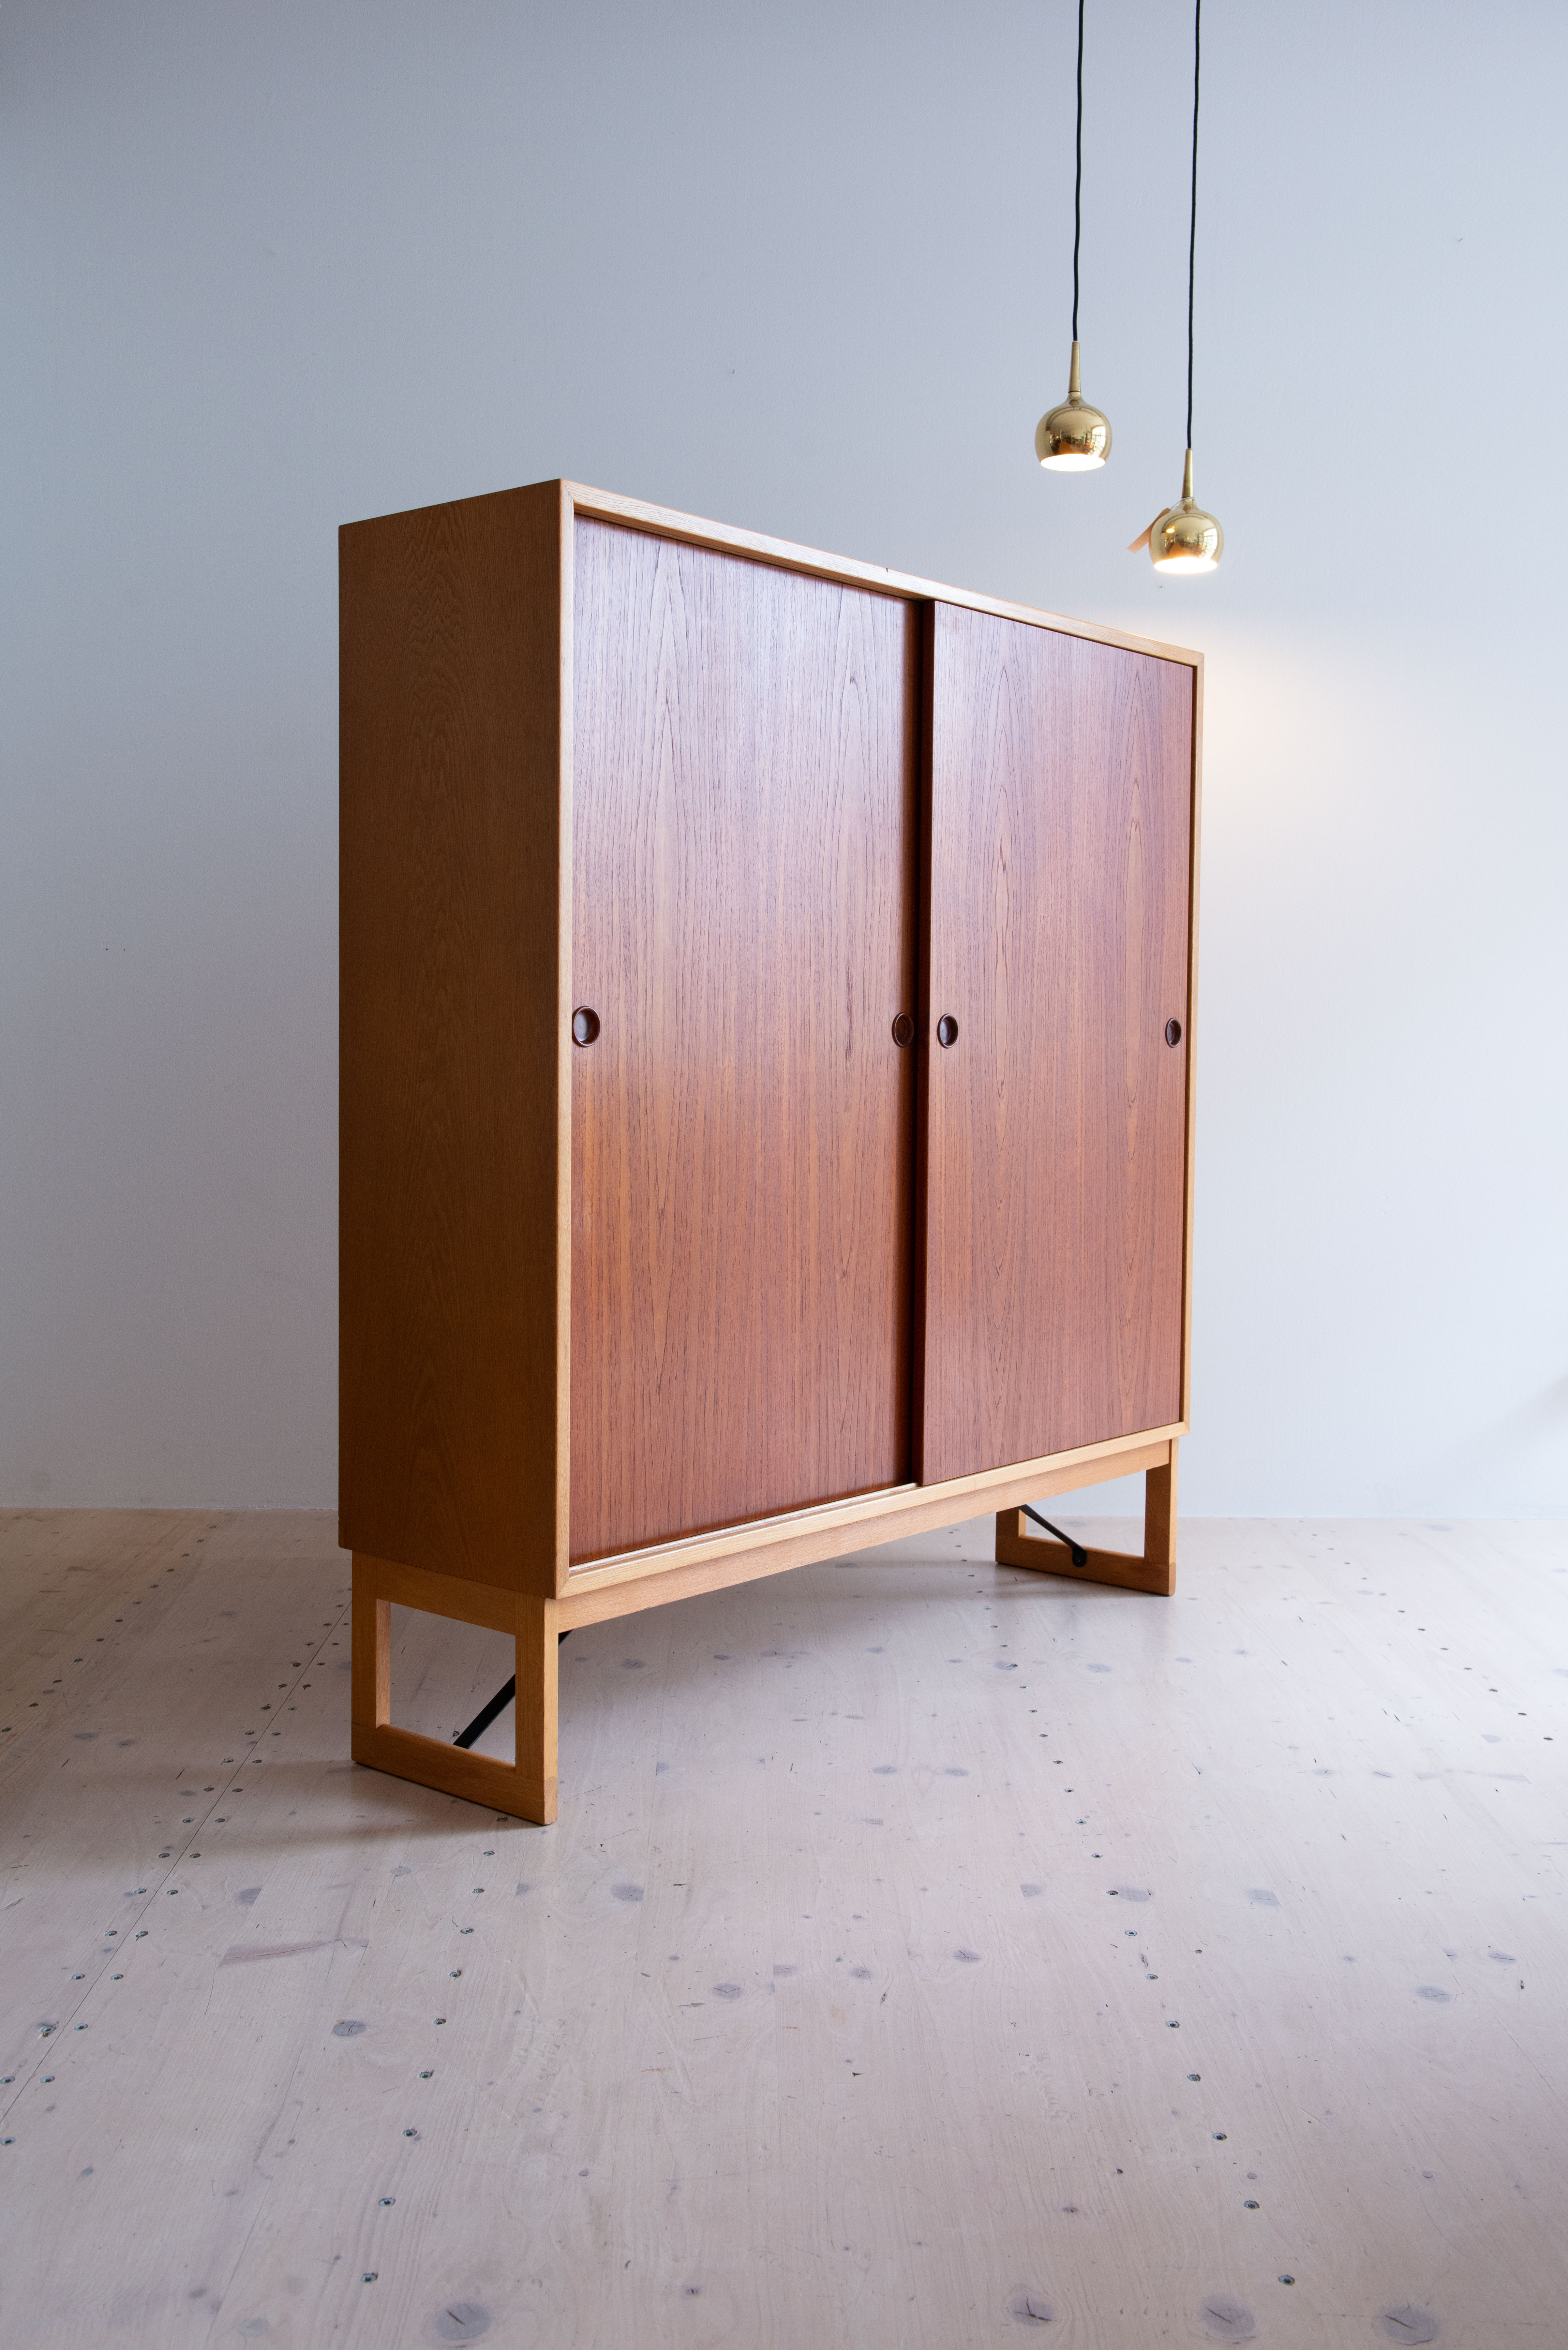 Teak Cabinet by Børge Mogensen. Produced by Karl Andersson & Söner in Denmark, 1959. Available at heyday möbel, Grubenstrasse 19, 8045 Zürich. Mid-Century Modern Furniture and Other Stuff.